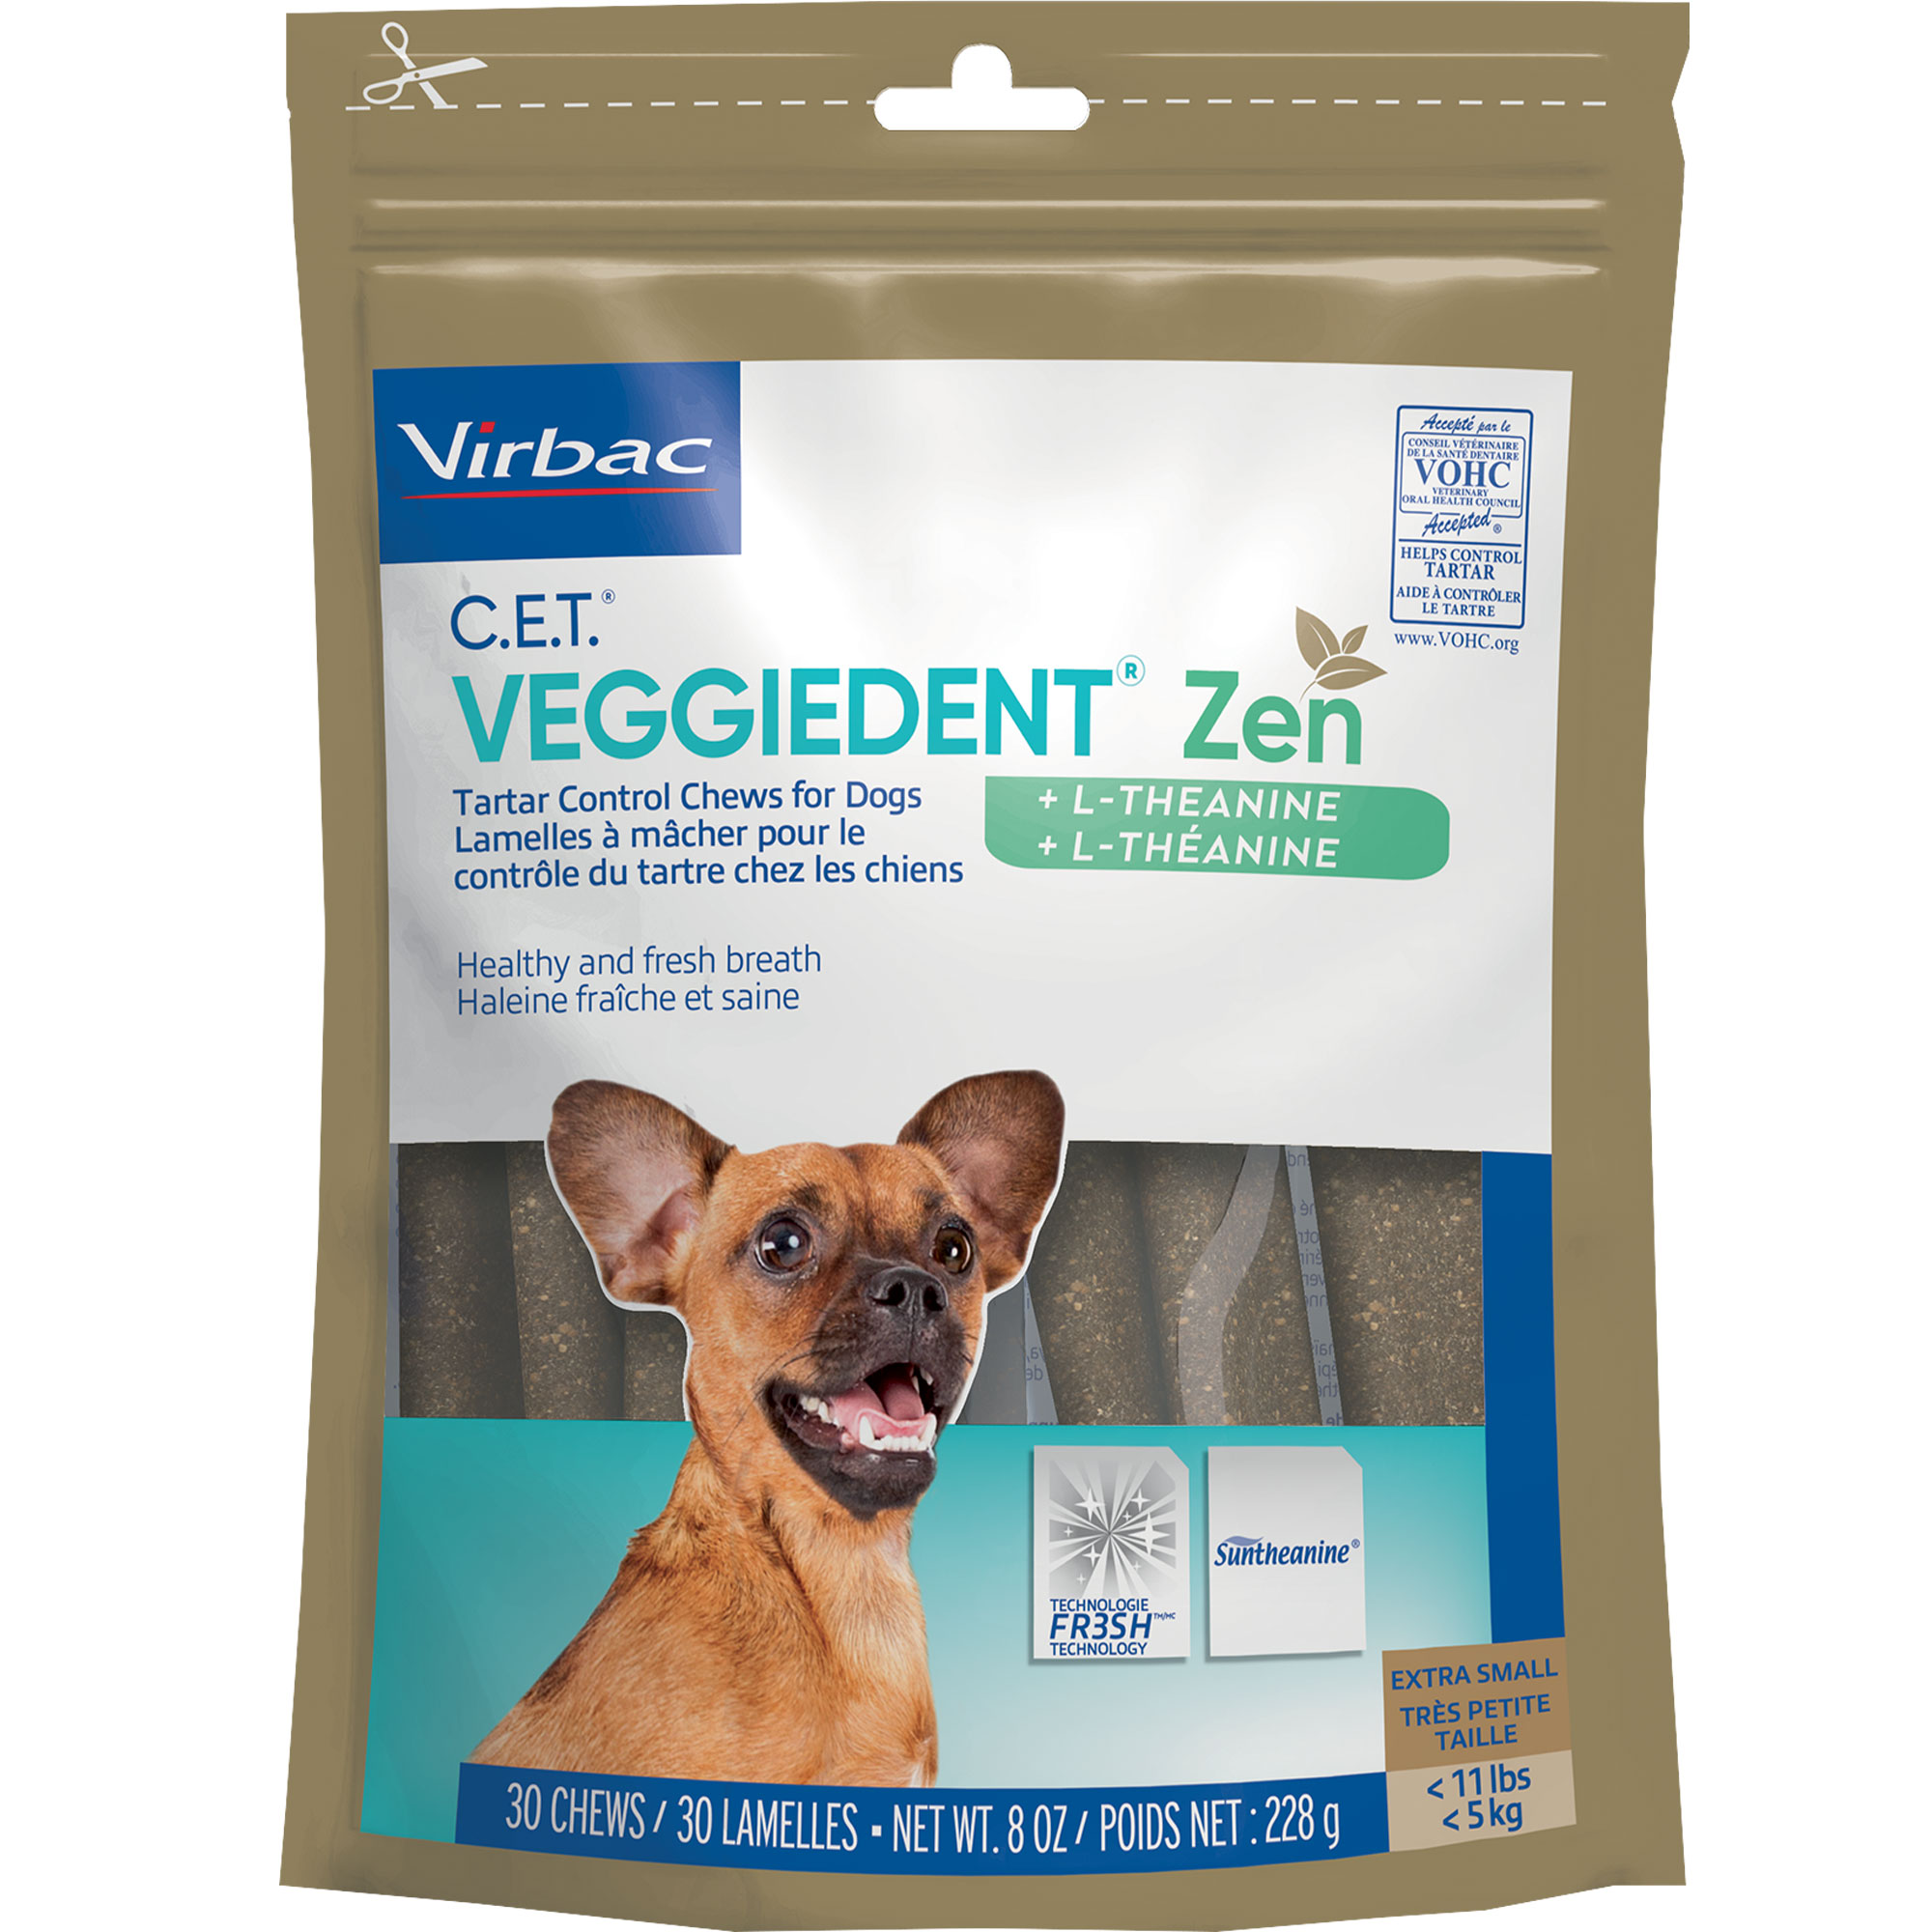 C.E.T. VEGGIEDENT Zen Tartar Control Chews for Dogs Usage